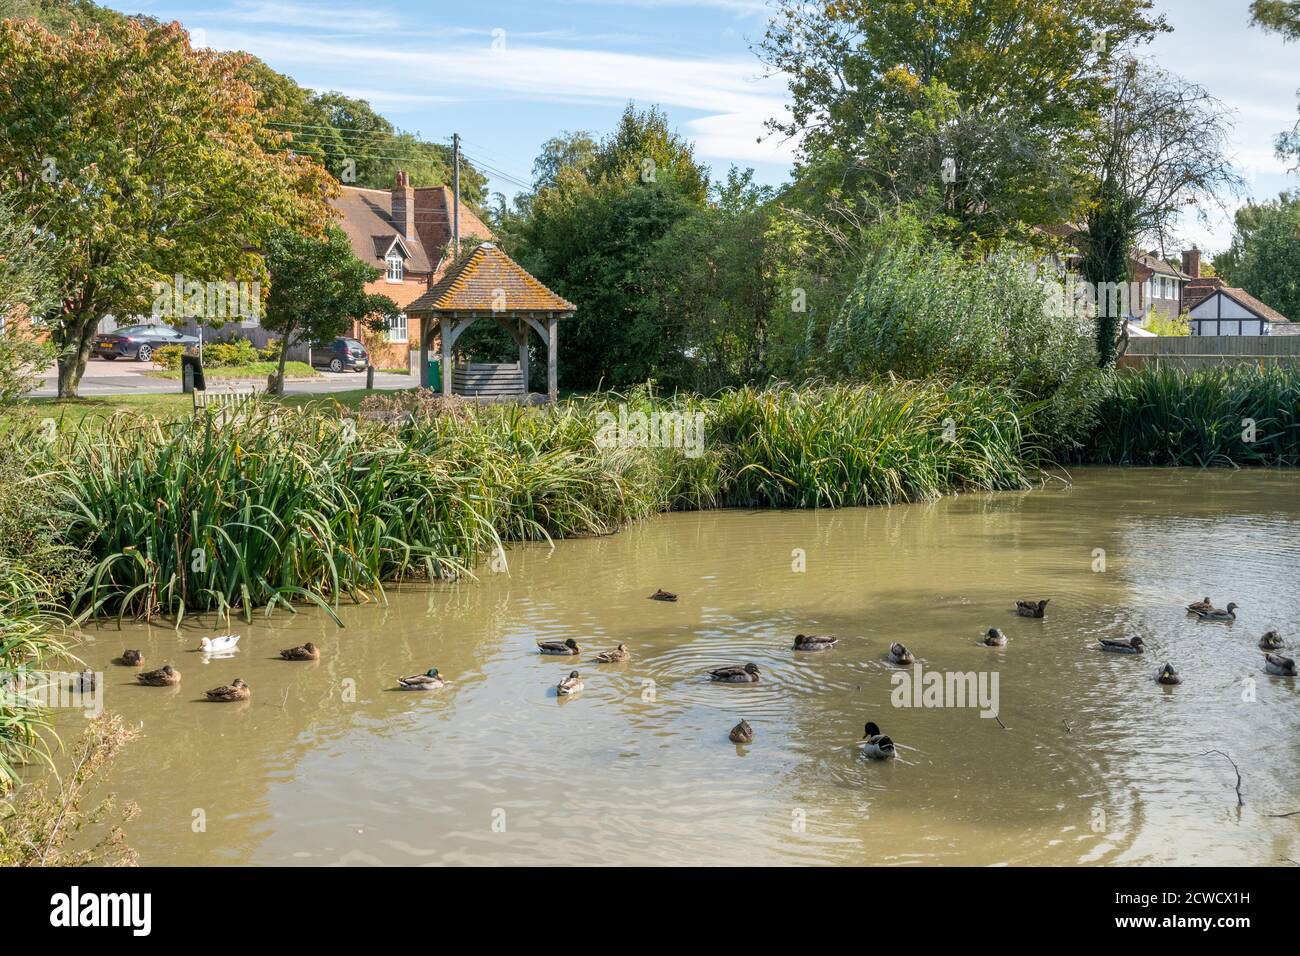 The village pond in West Ilsley, Berkshire, UK Stock Photo